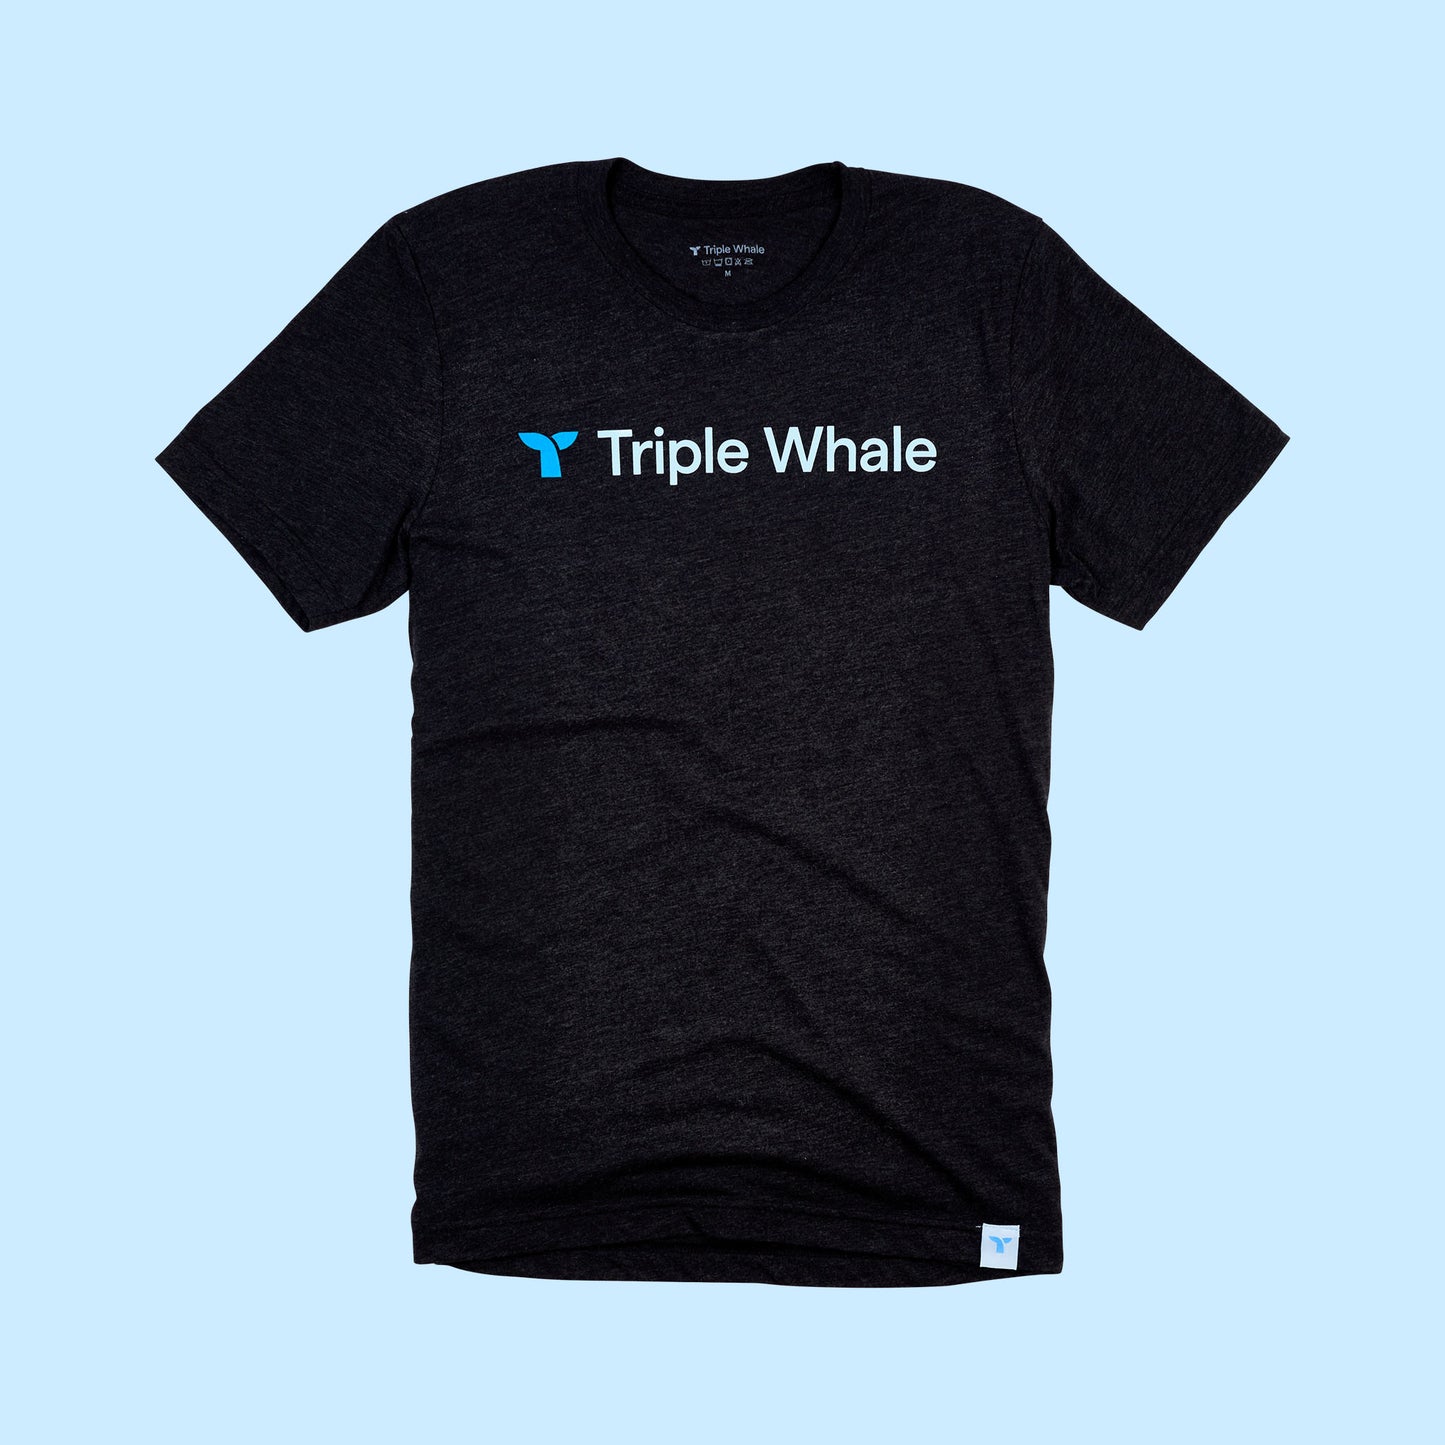 Triple Whale logo printed on charcoal black triblend T-shirt